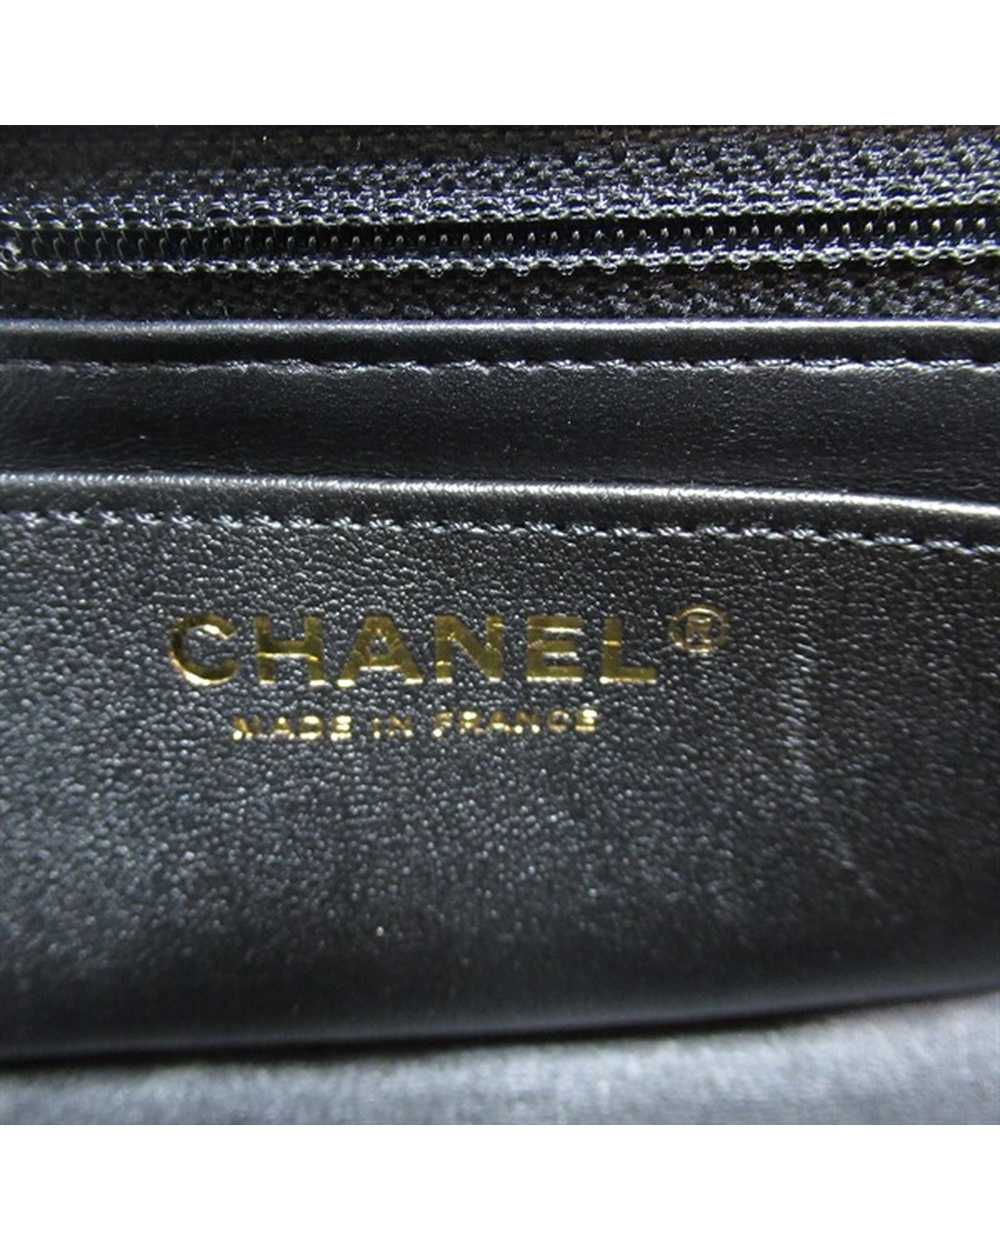 Chanel Chanel Tweed Camellia Flap Bag in Excellen… - image 6